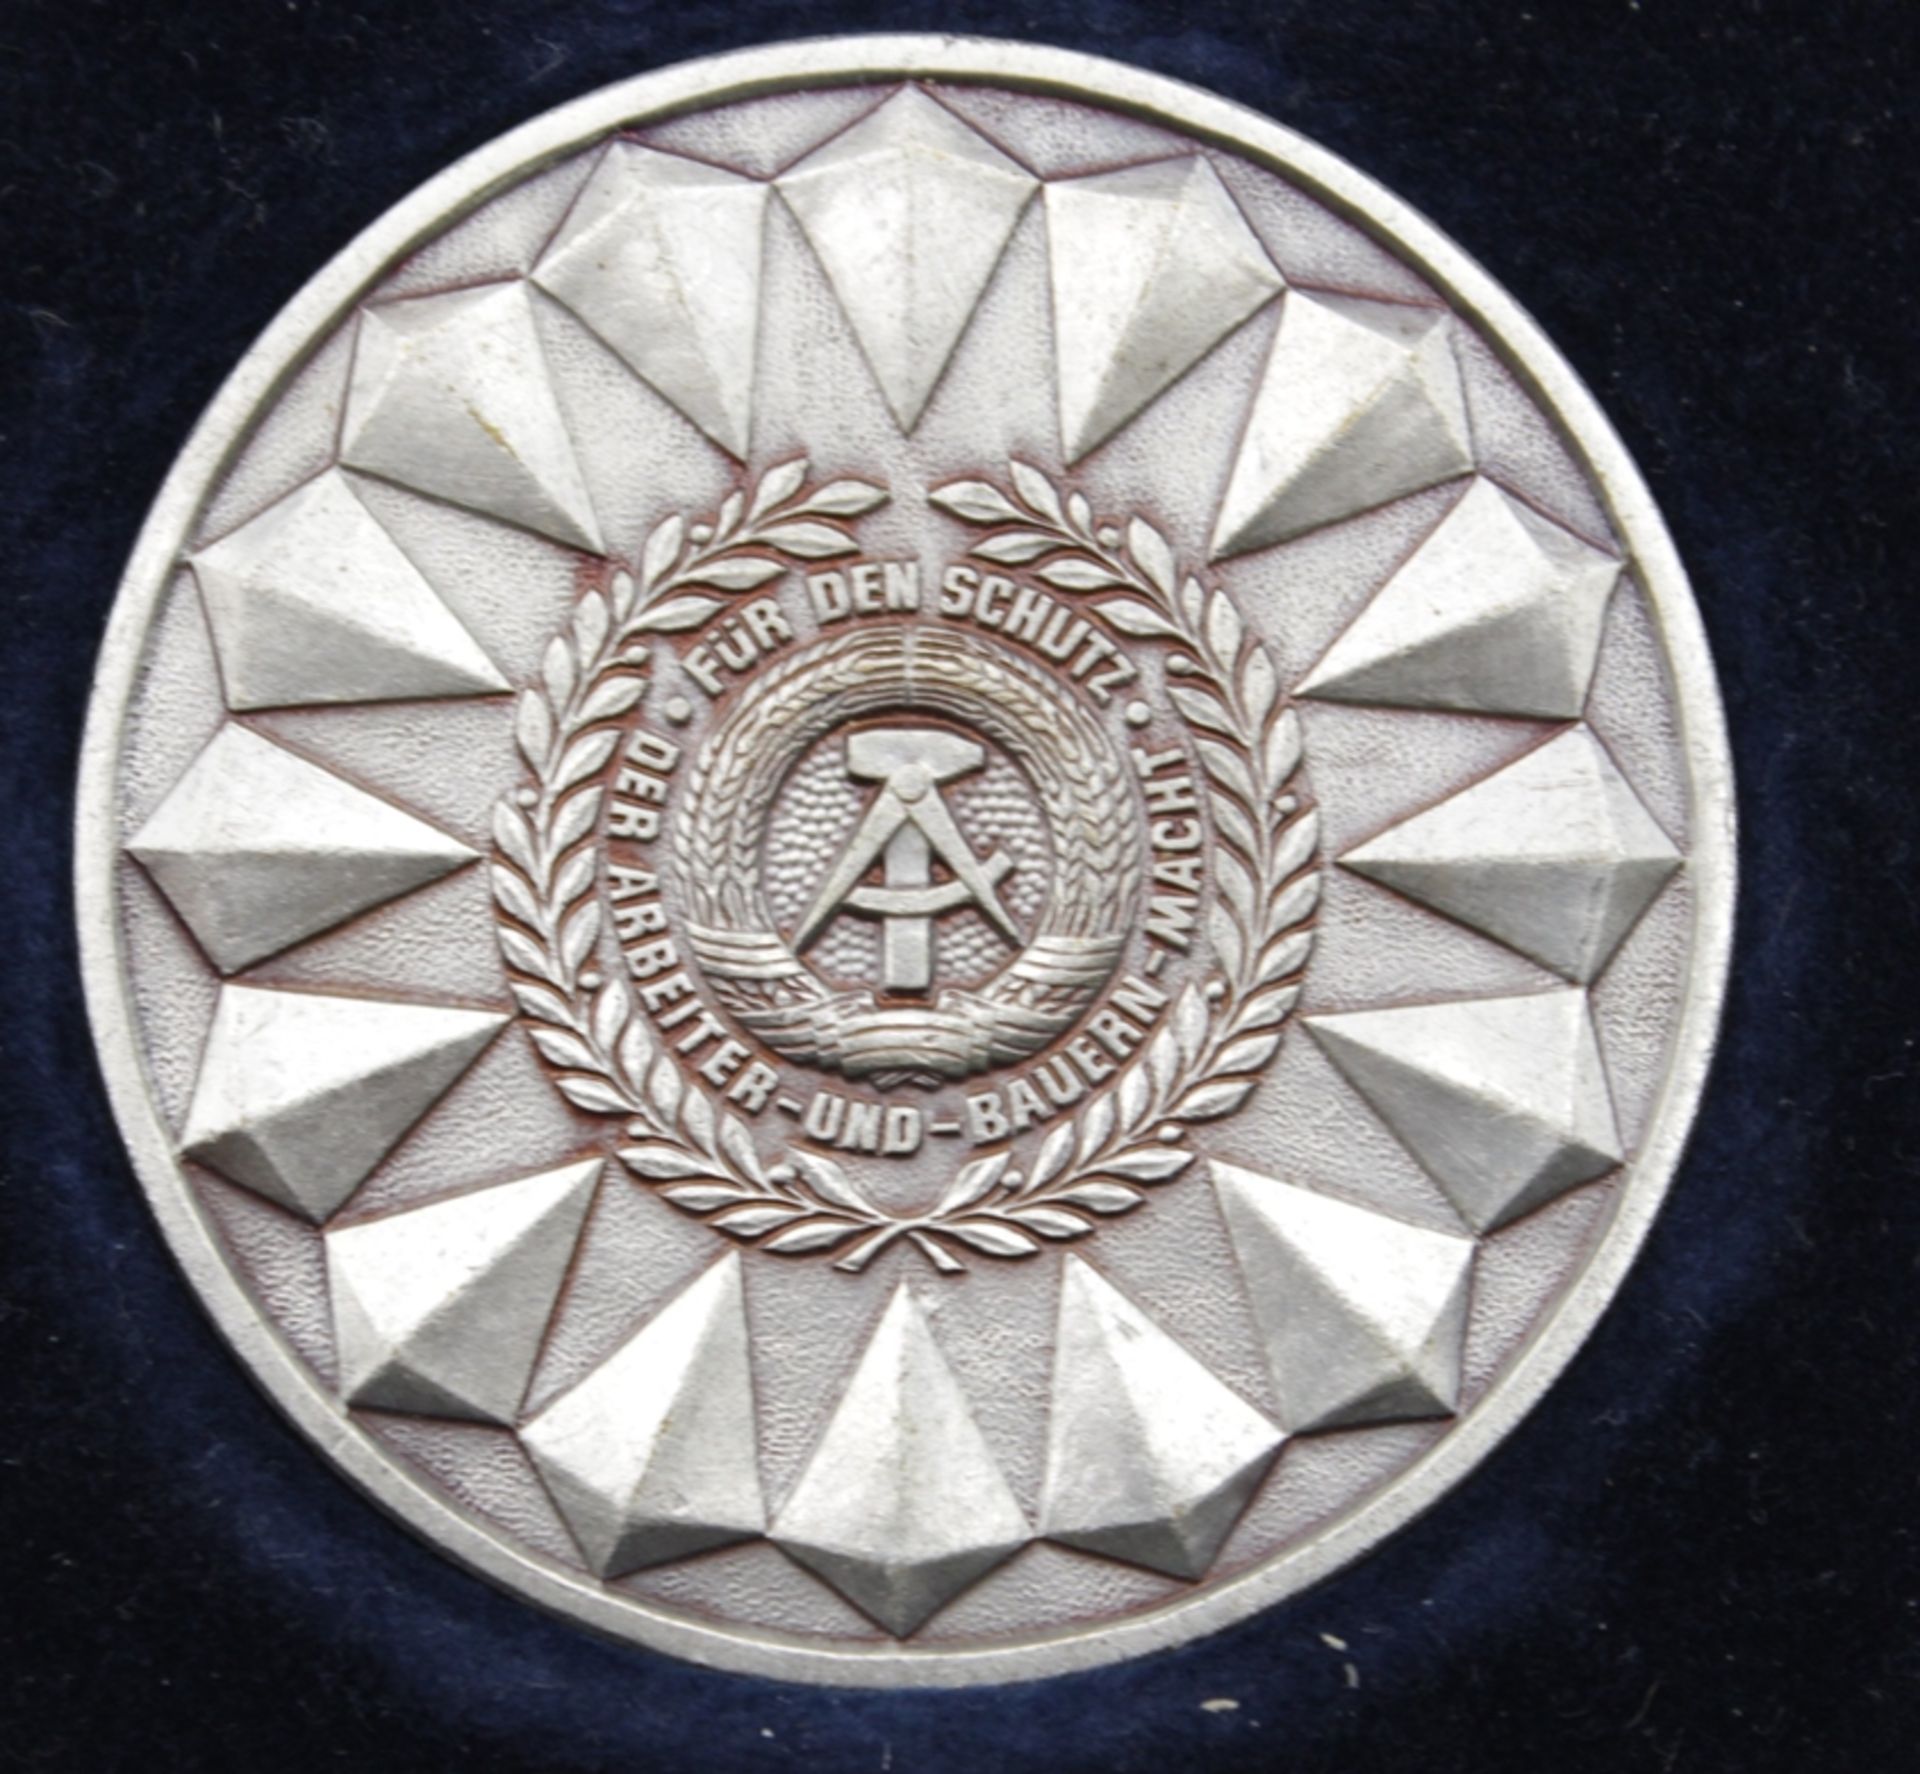 Medaille, Grenztruppen der DDR, versilbert, orig. Etui, D-6cm. - Image 3 of 3